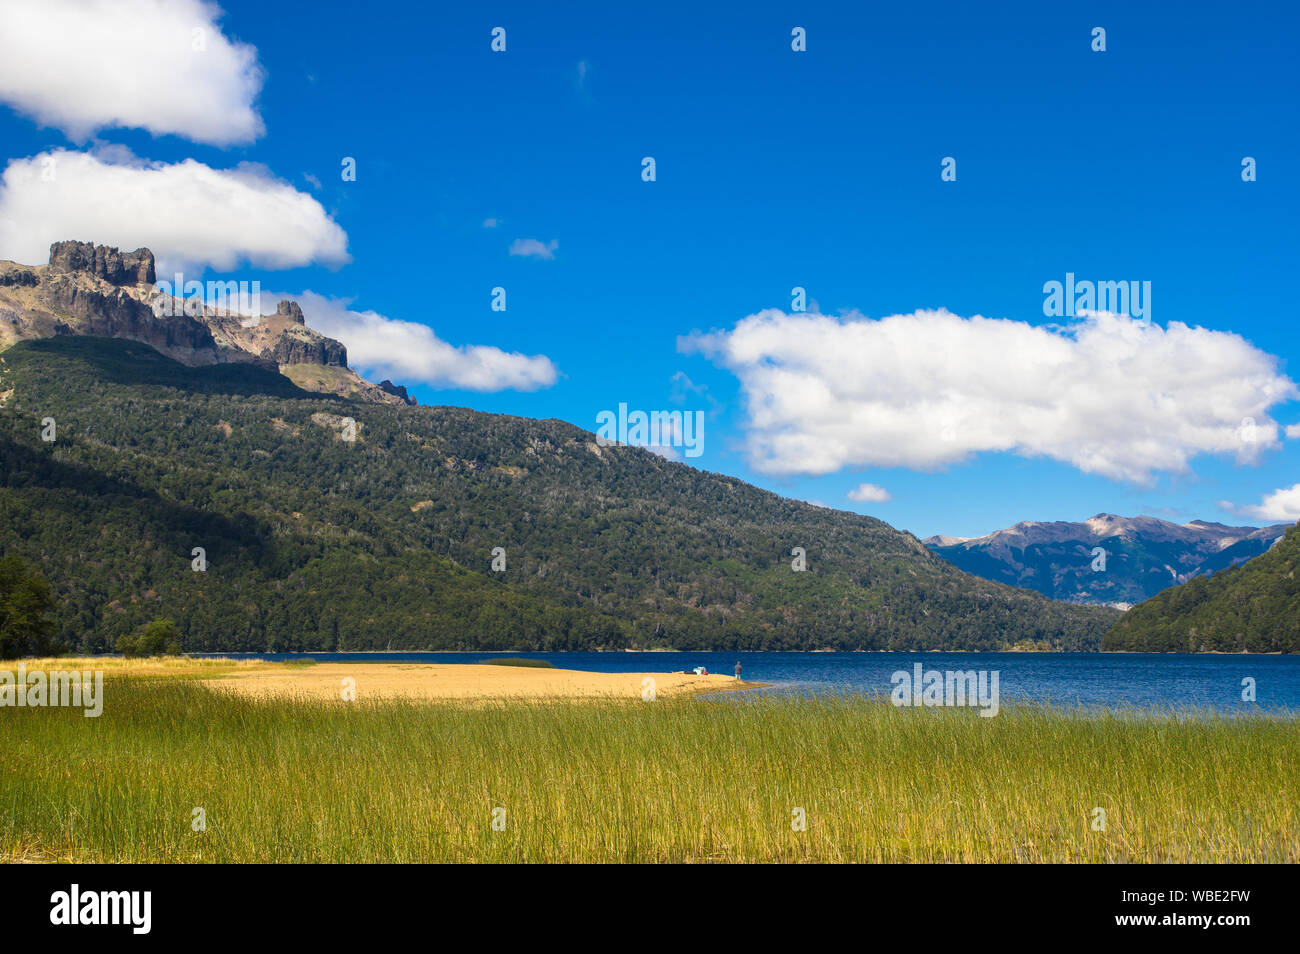 Falkner Lake located in the Nahuel Huapi National Park, province of Neuquen, Argentina Stock Photo